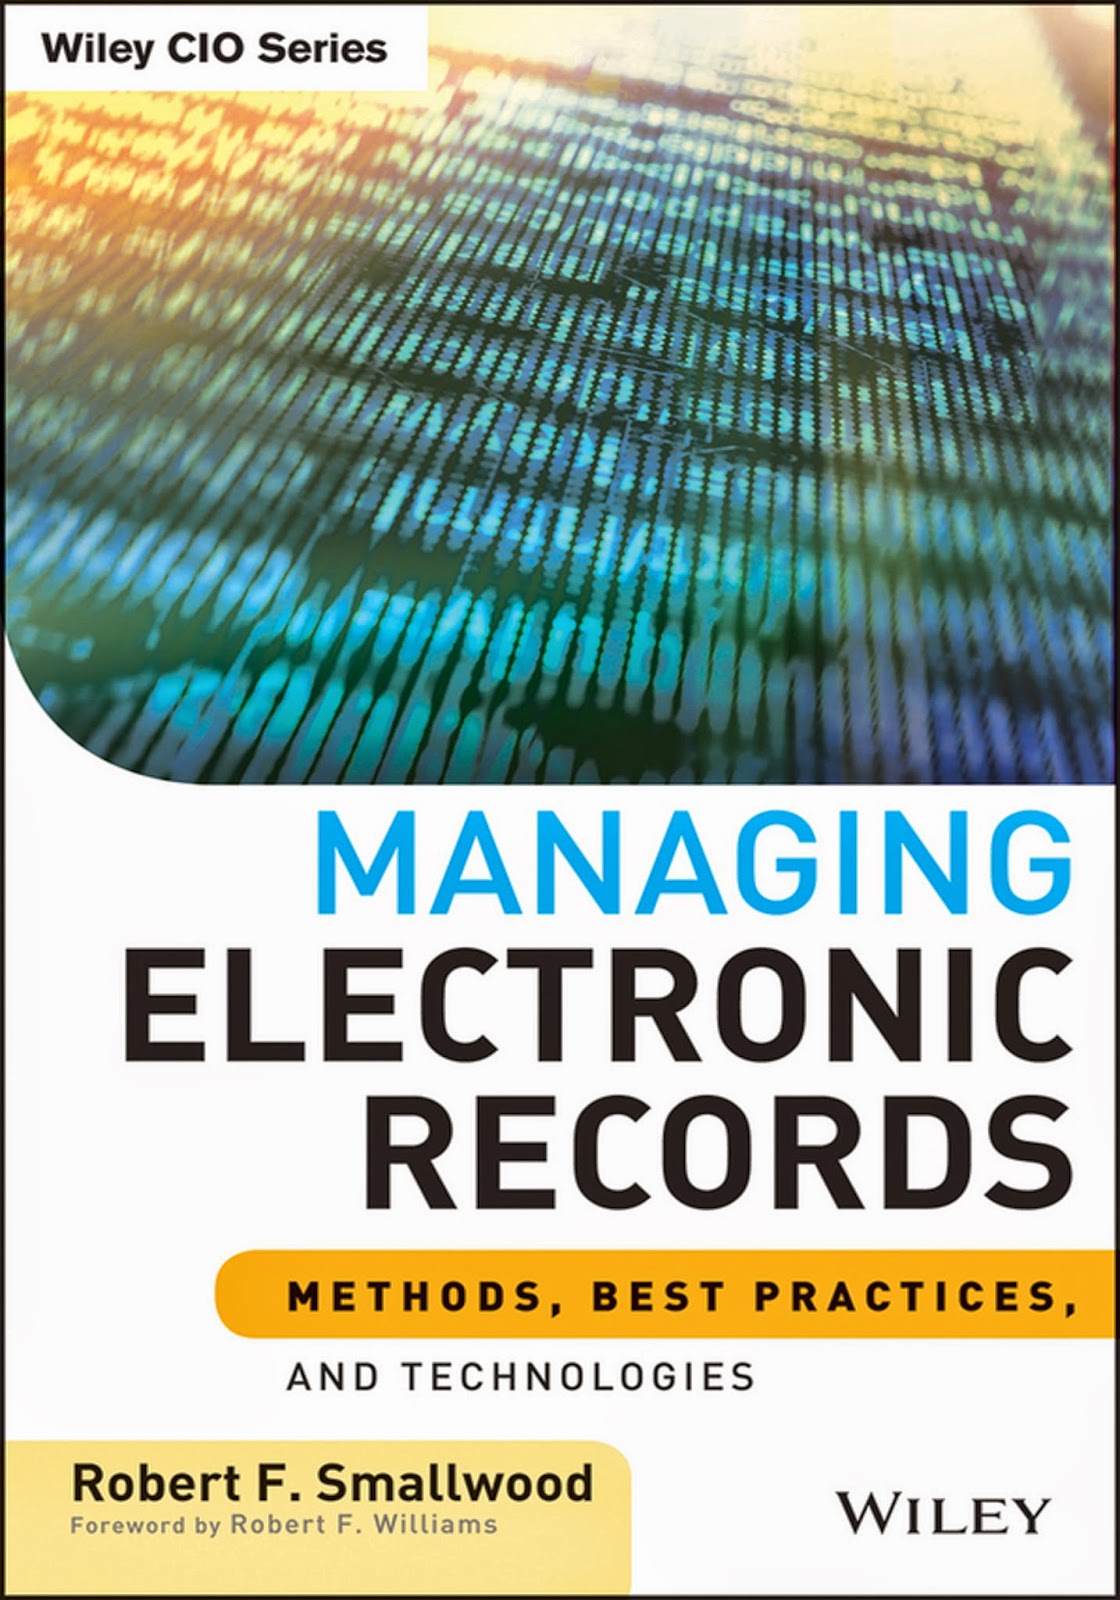 http://kingcheapebook.blogspot.com/2014/07/managing-electronic-records-methods.html